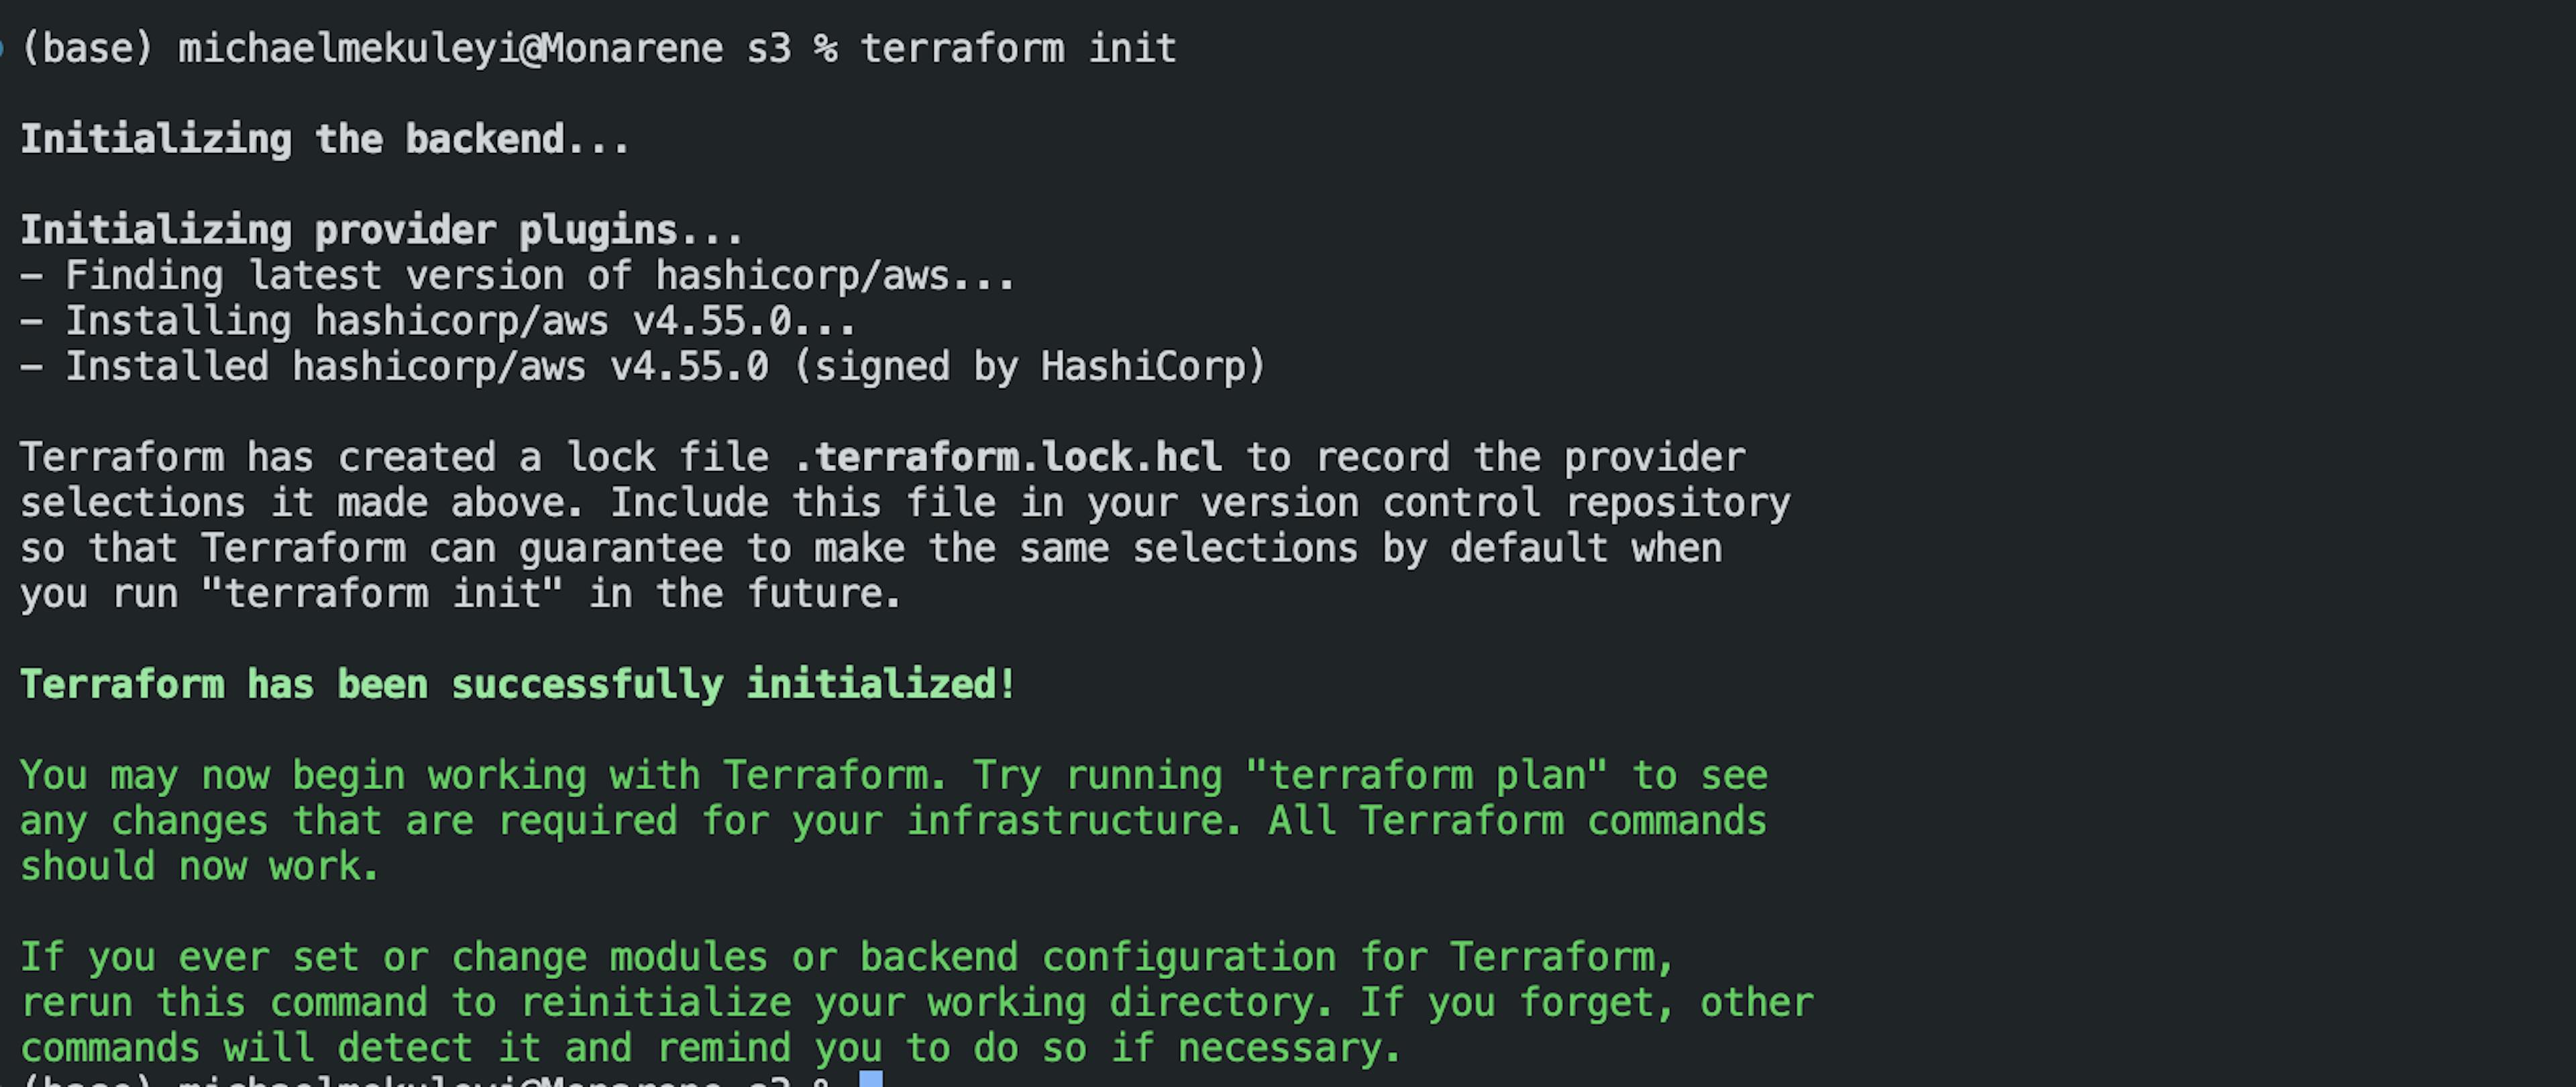 Running terraform init on your local machine